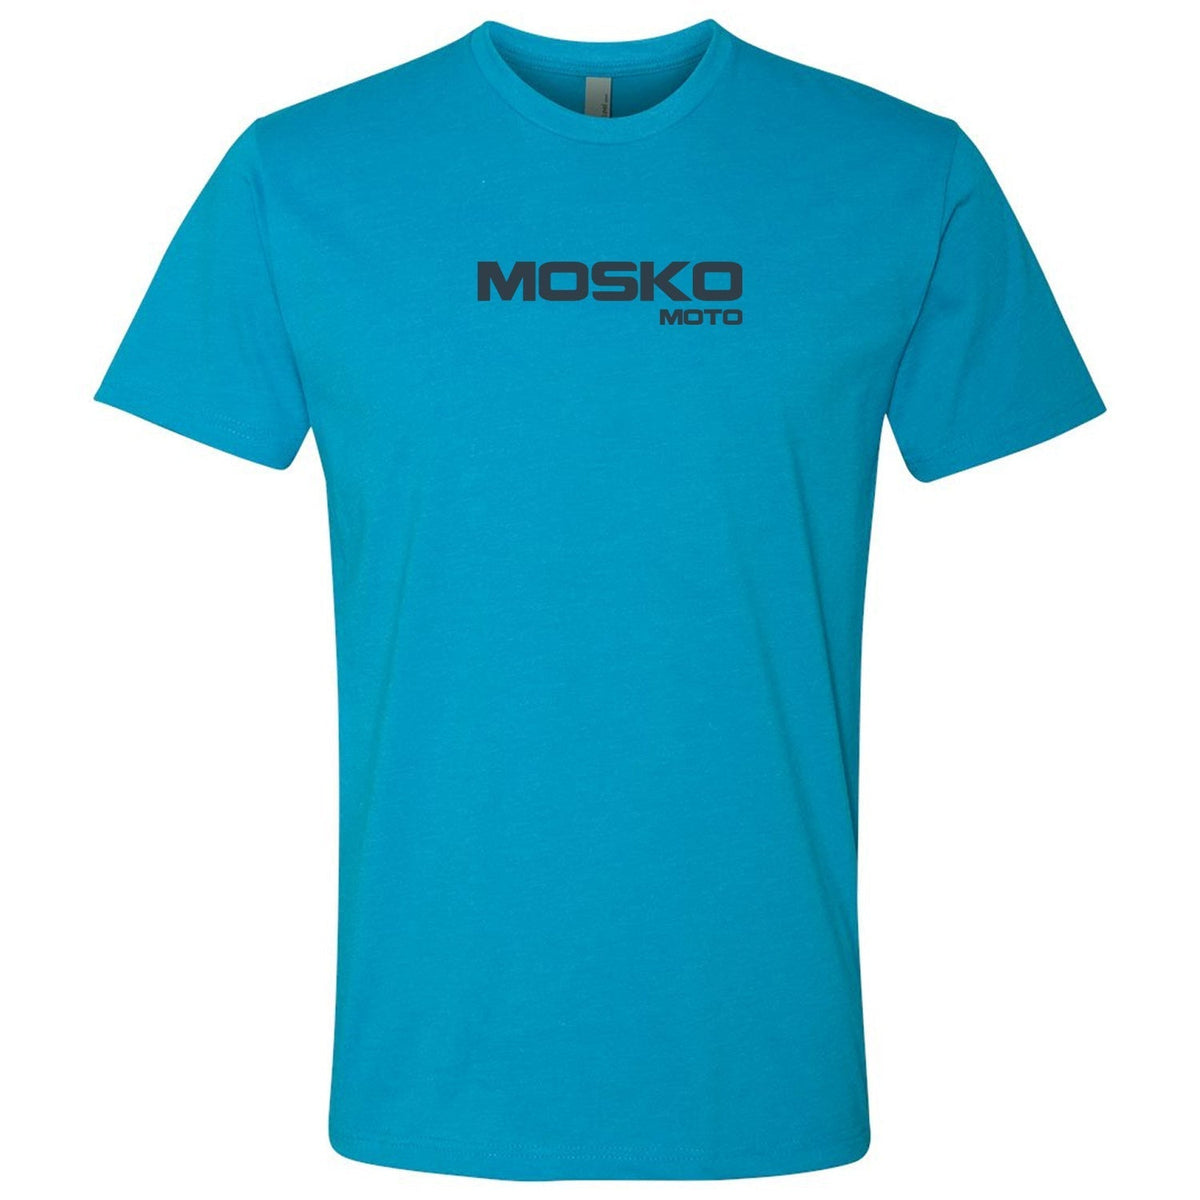 Mossimo Classic Logo tee in black